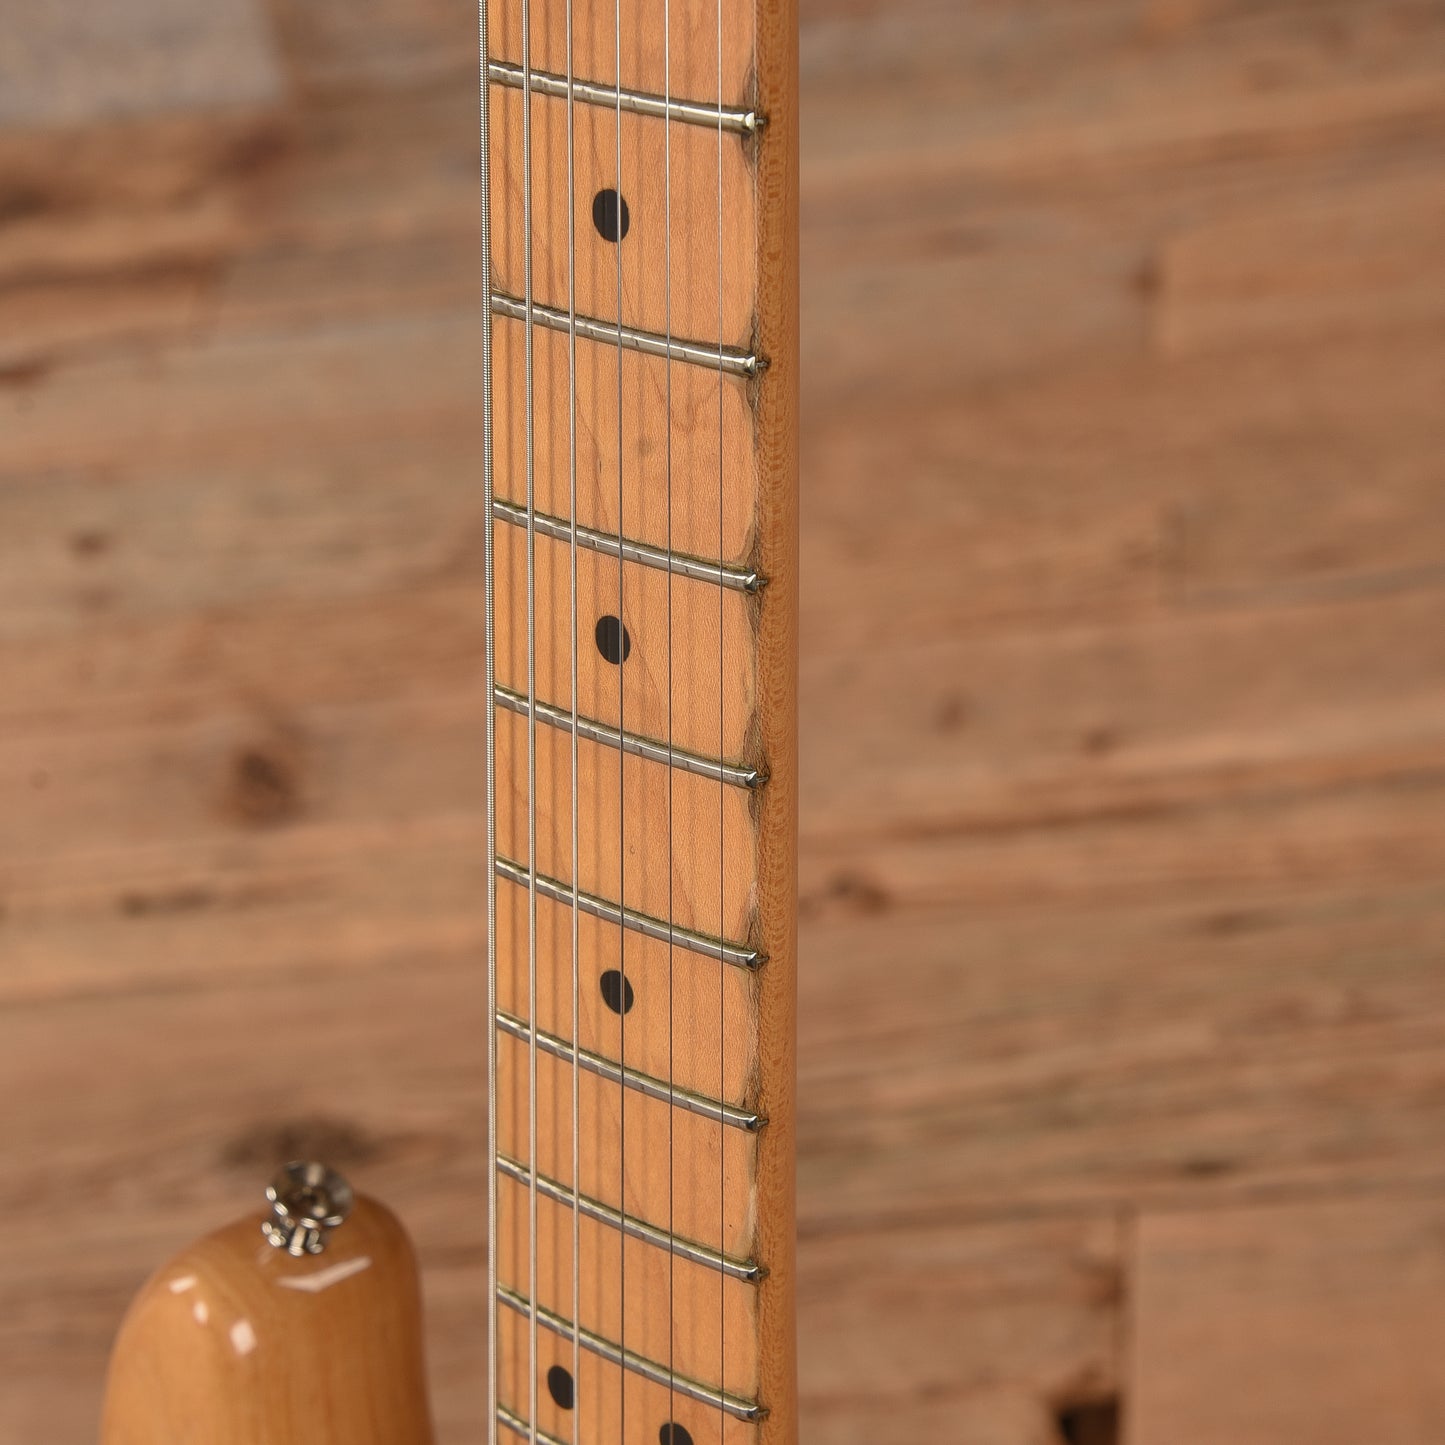 Fender American Standard Stratocaster Natural 1999